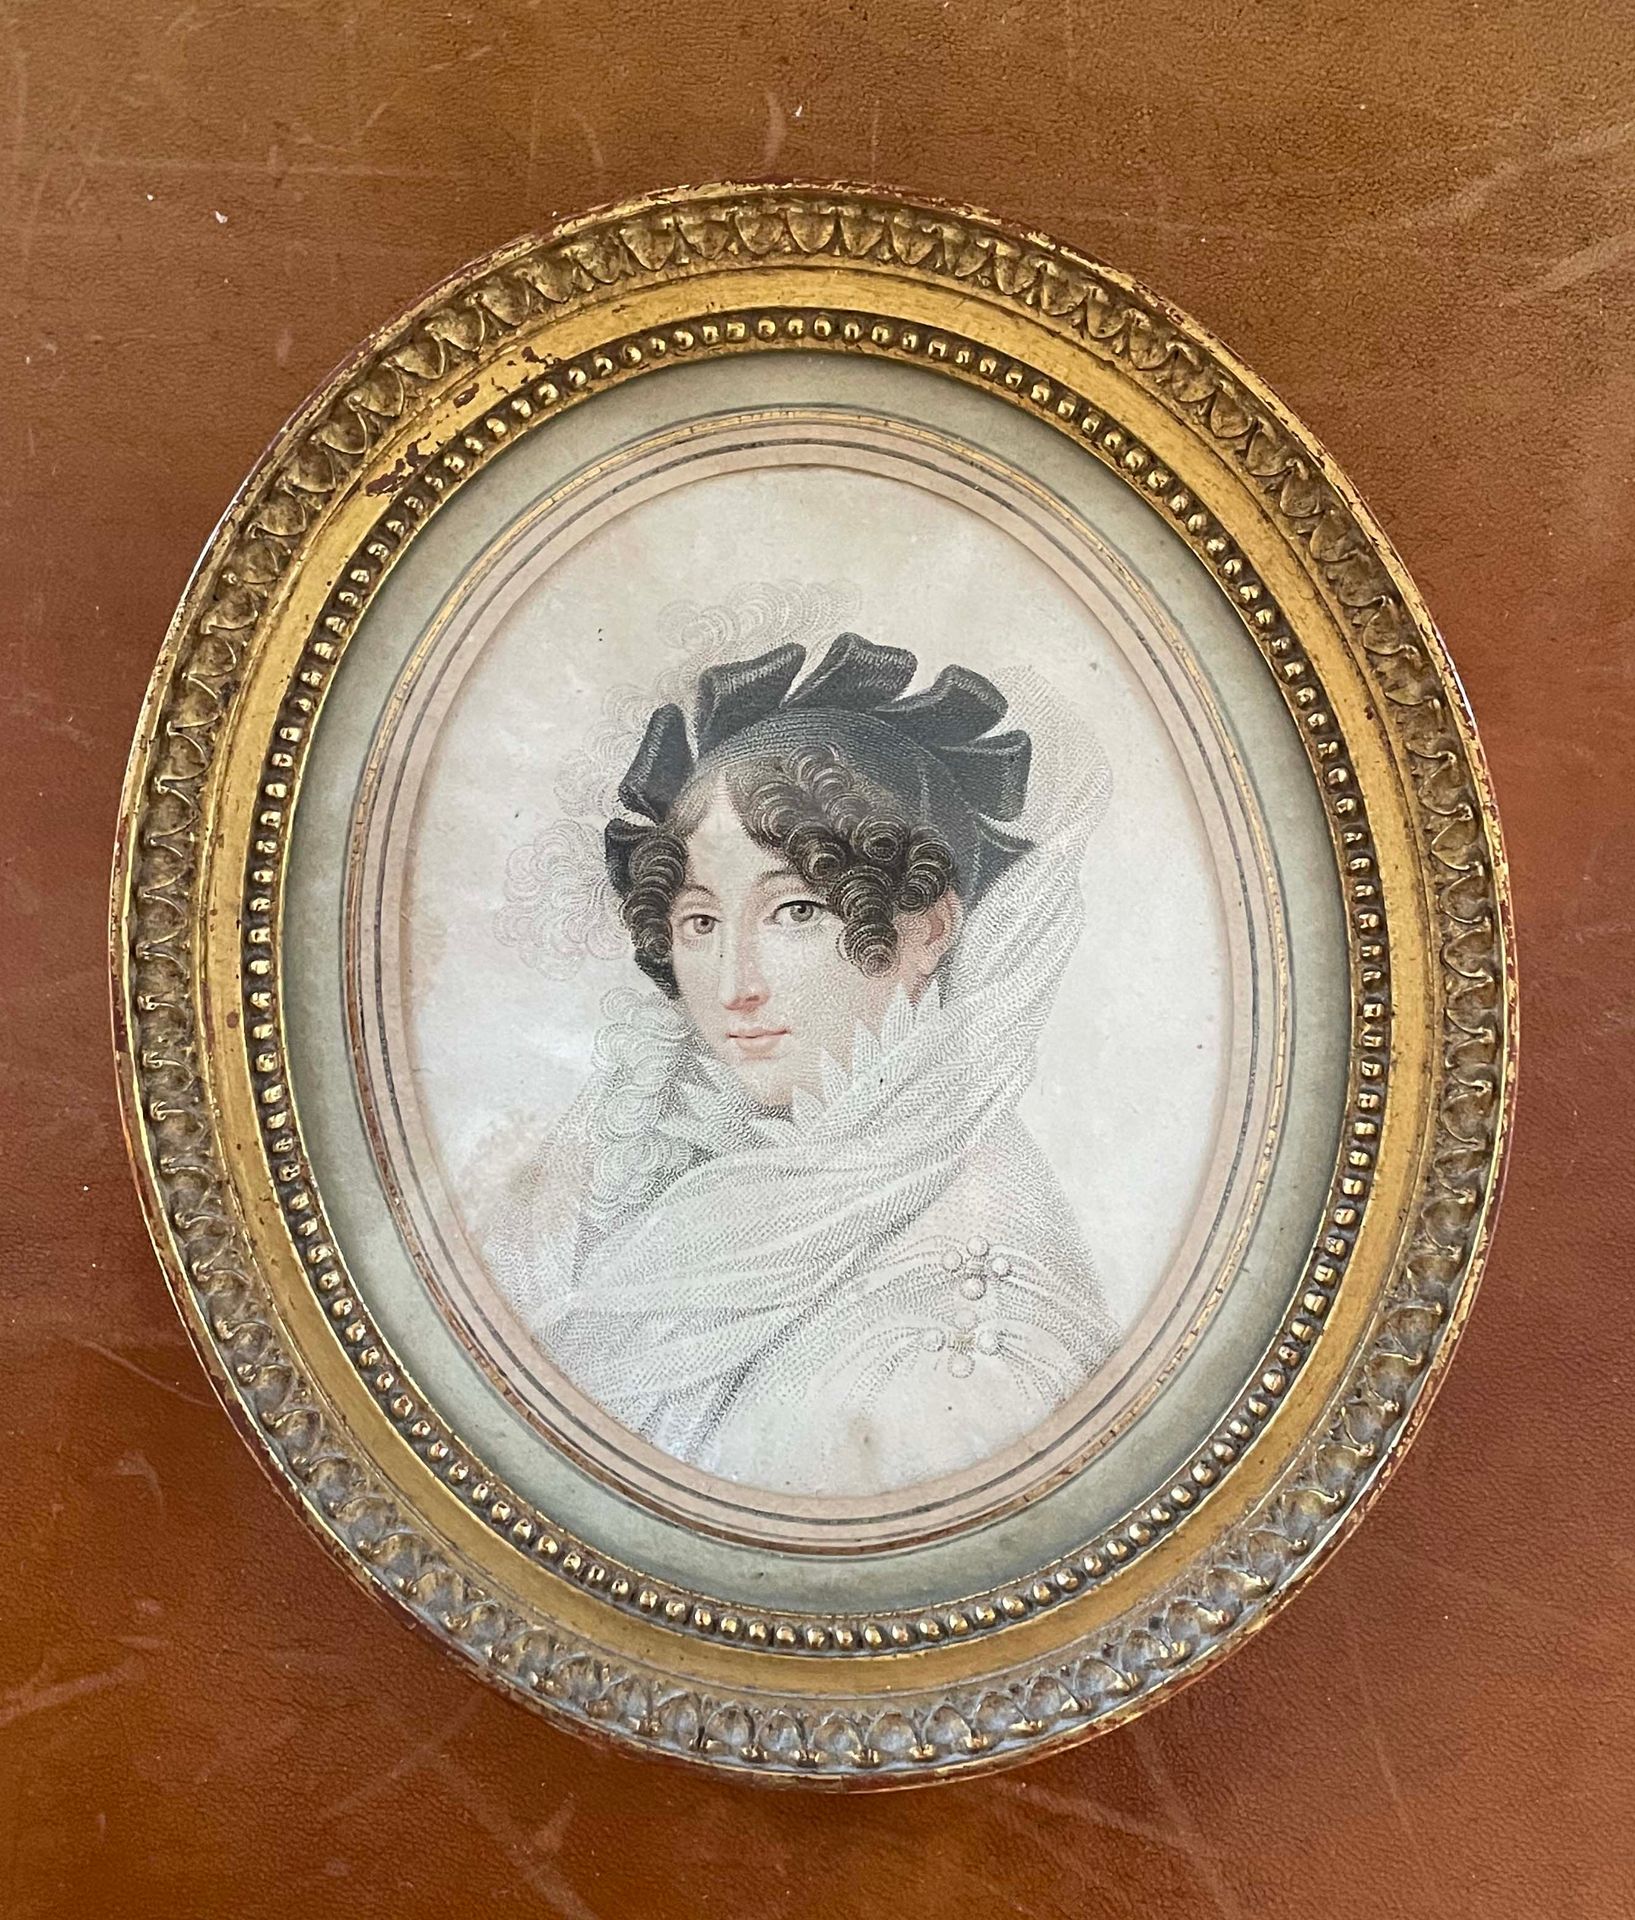 Null 小椭圆形雕刻 "年轻女子的肖像"。
镀金木框上装饰着珍珠和心形。
19世纪初。
16 x 14 cm